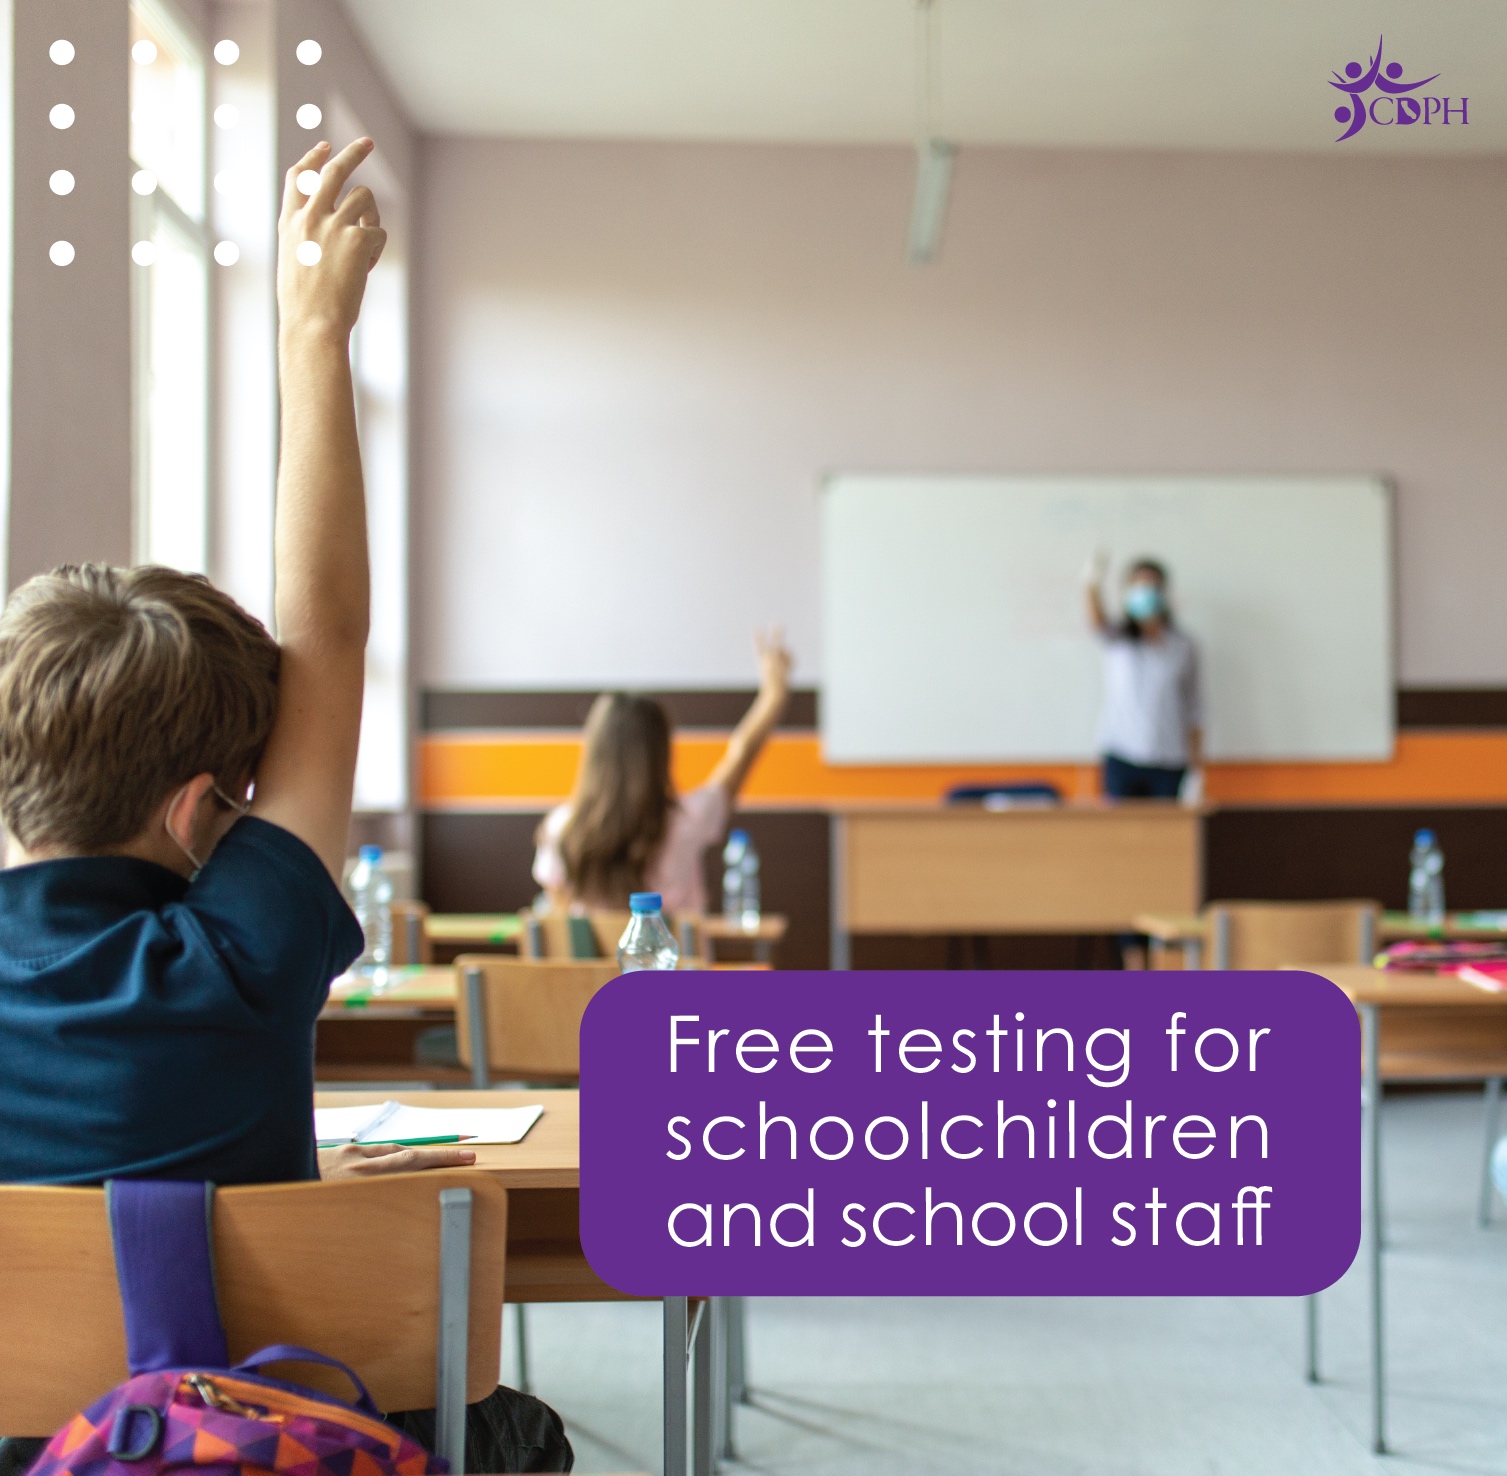 Free testing for schoolchildren and school staff